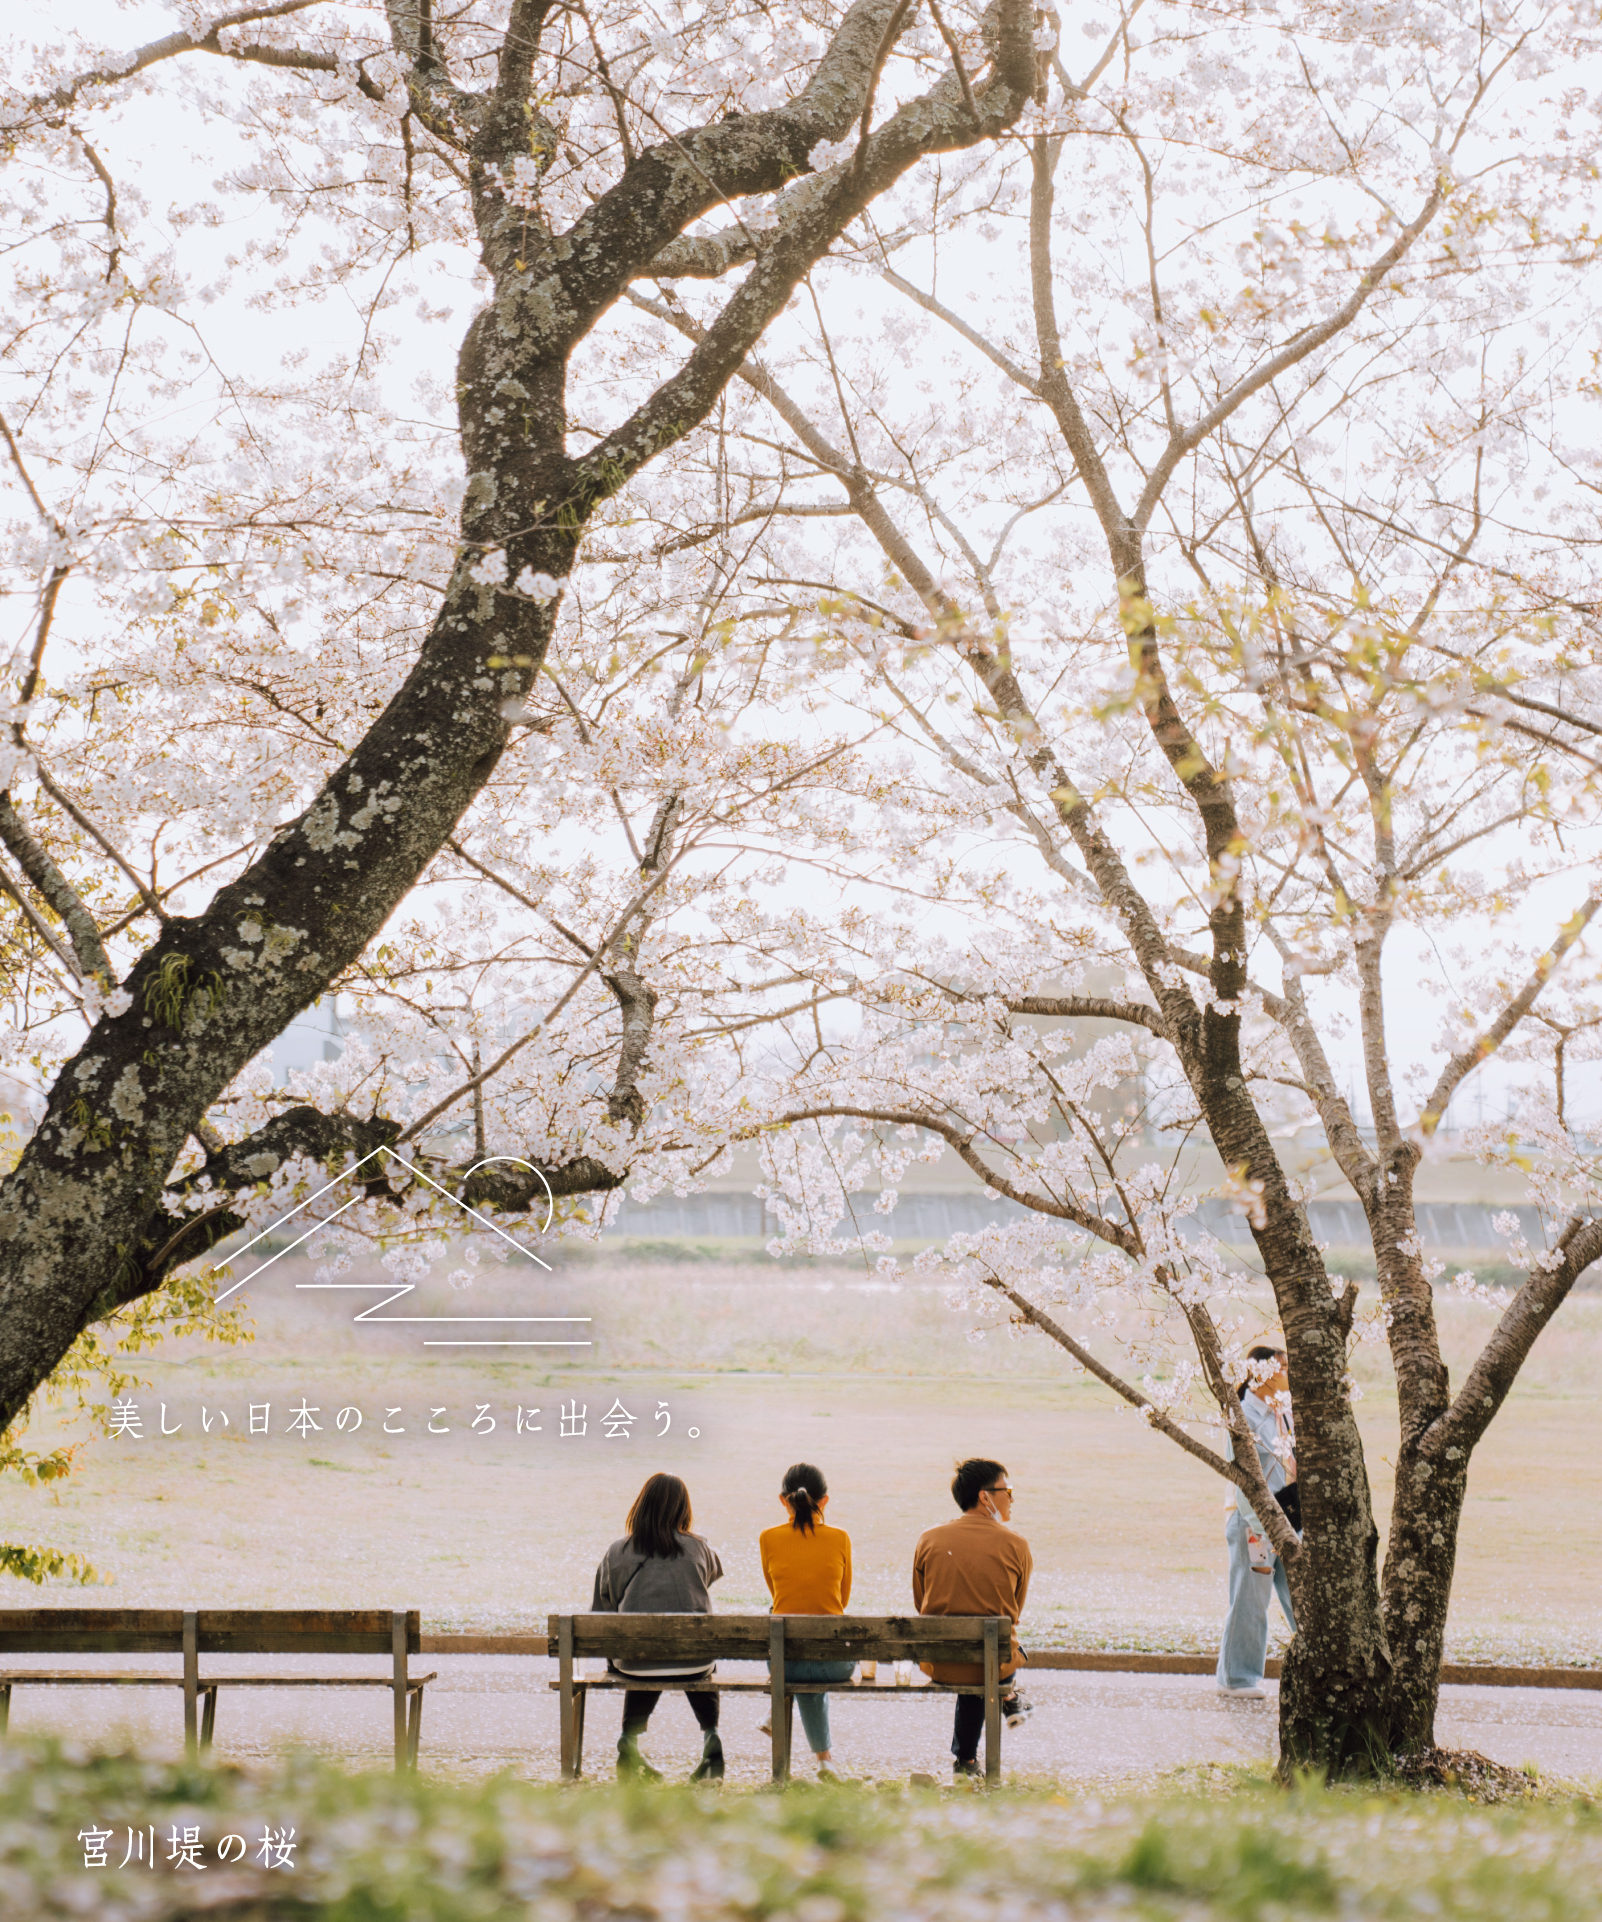 Fleurs de cerisier sur la rive Miyagawa